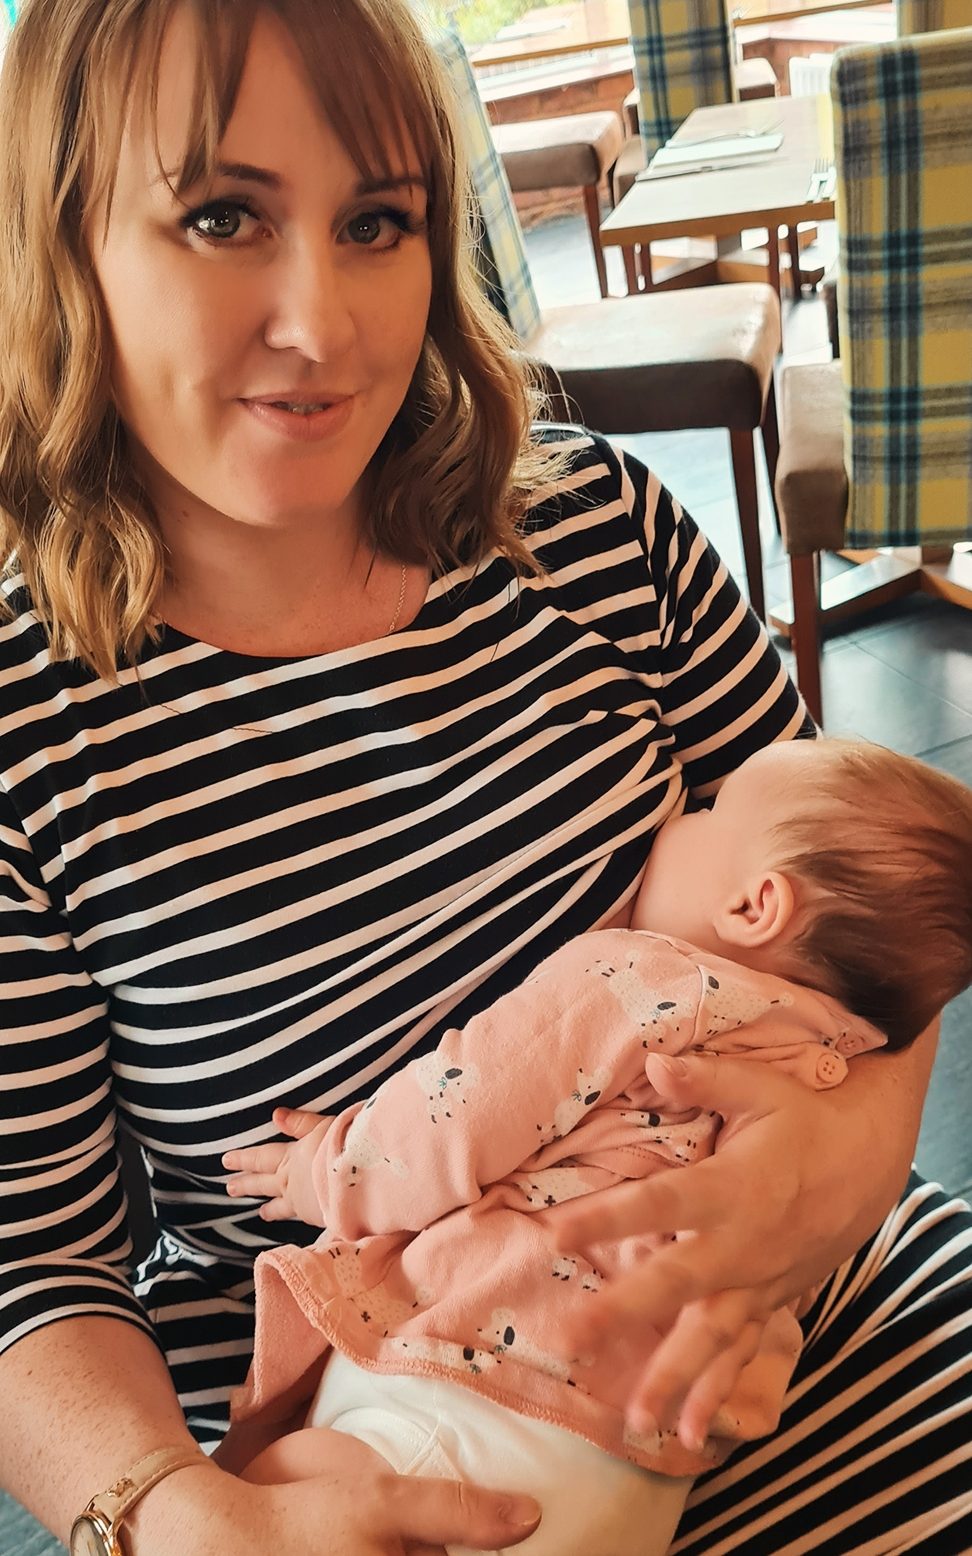 Victoria breastfeeding in public